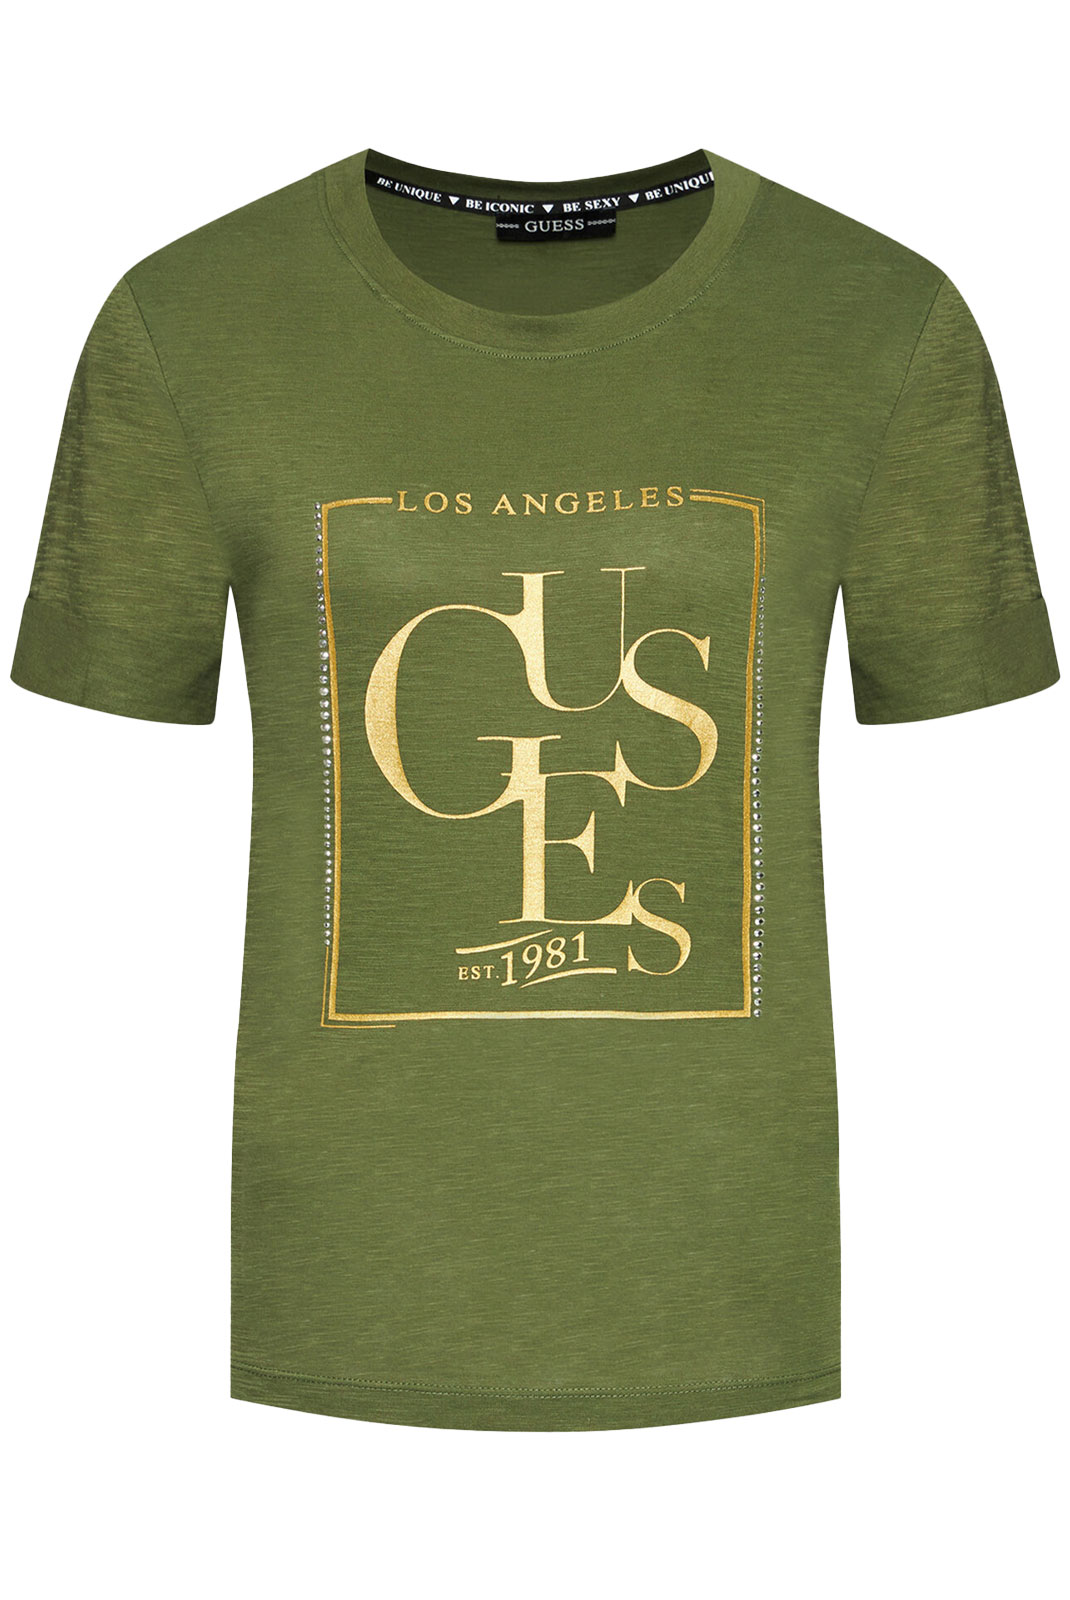 Tee-shirt vert Guess élégant pour femme - W1yi0q R8g00